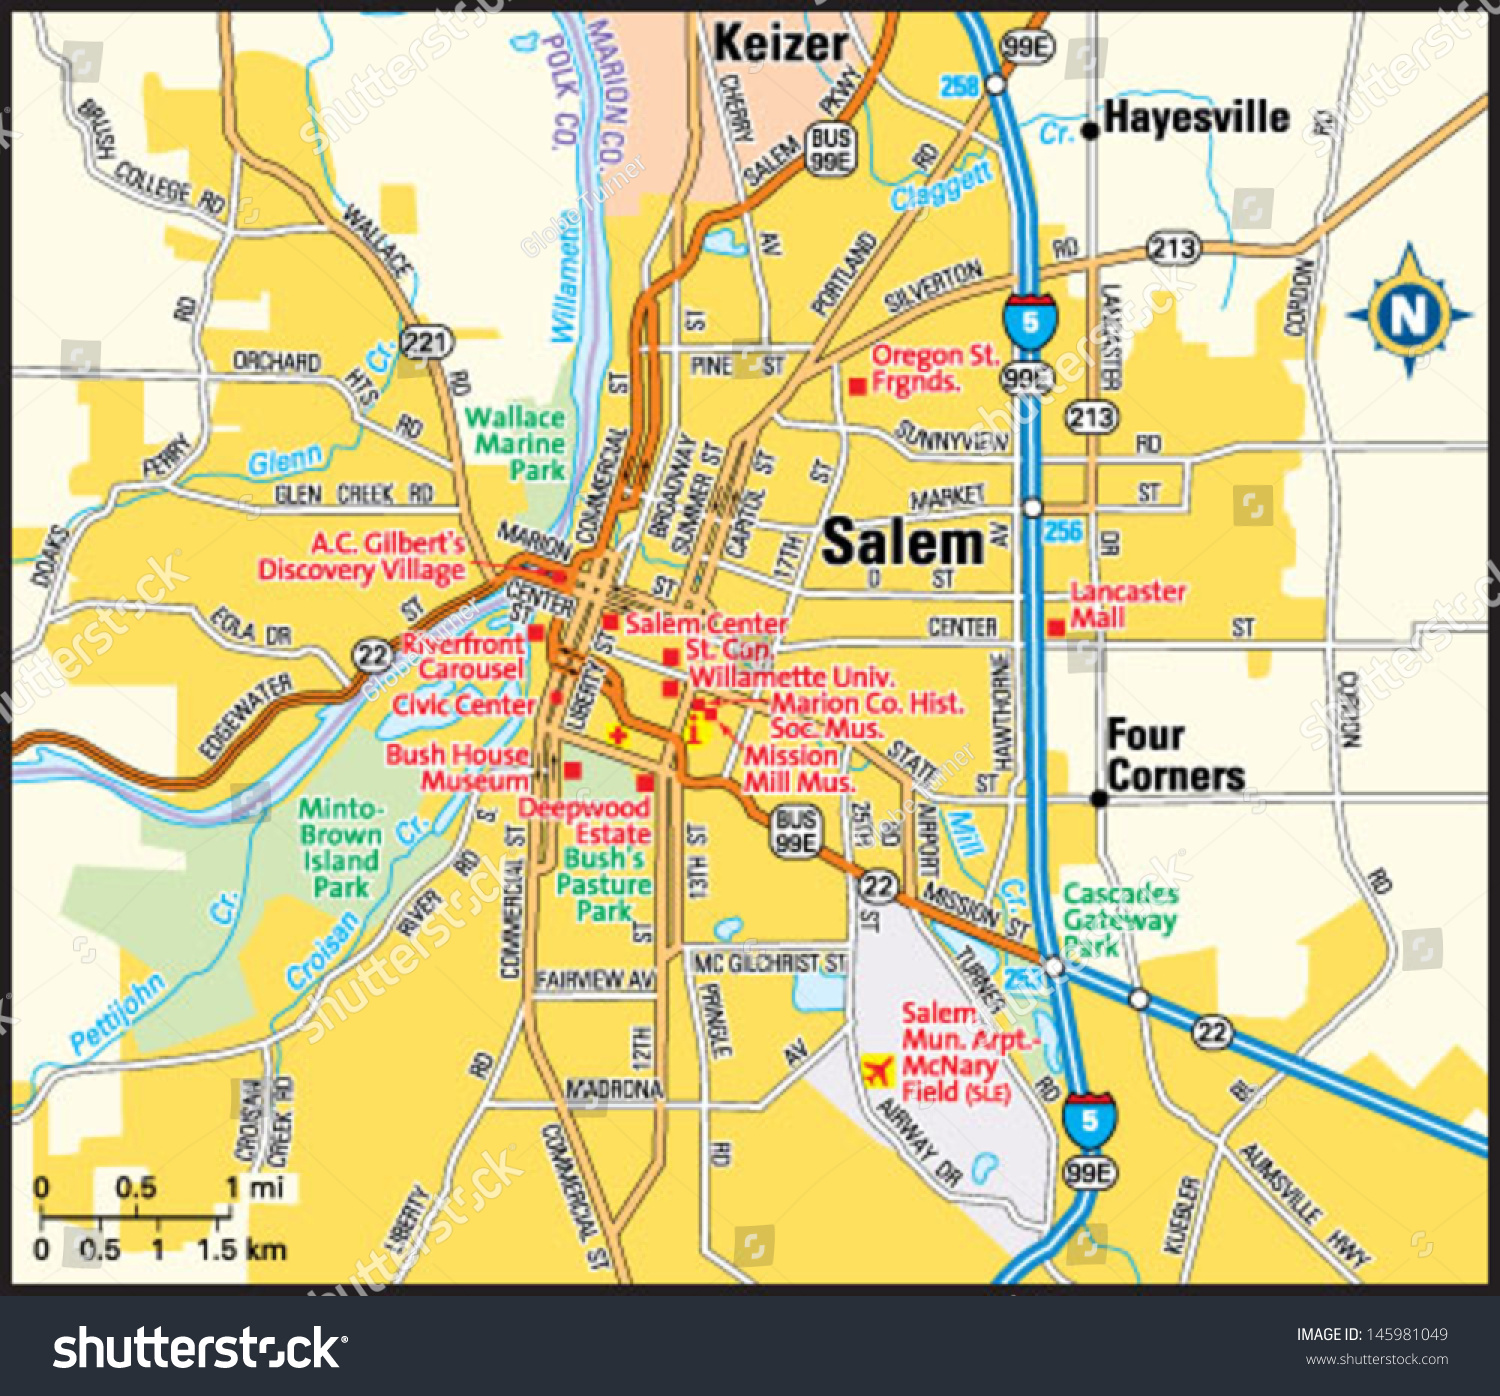 map of salem oregon Salem Oregon Area Map Stock Photo 145981049 Avopix Com